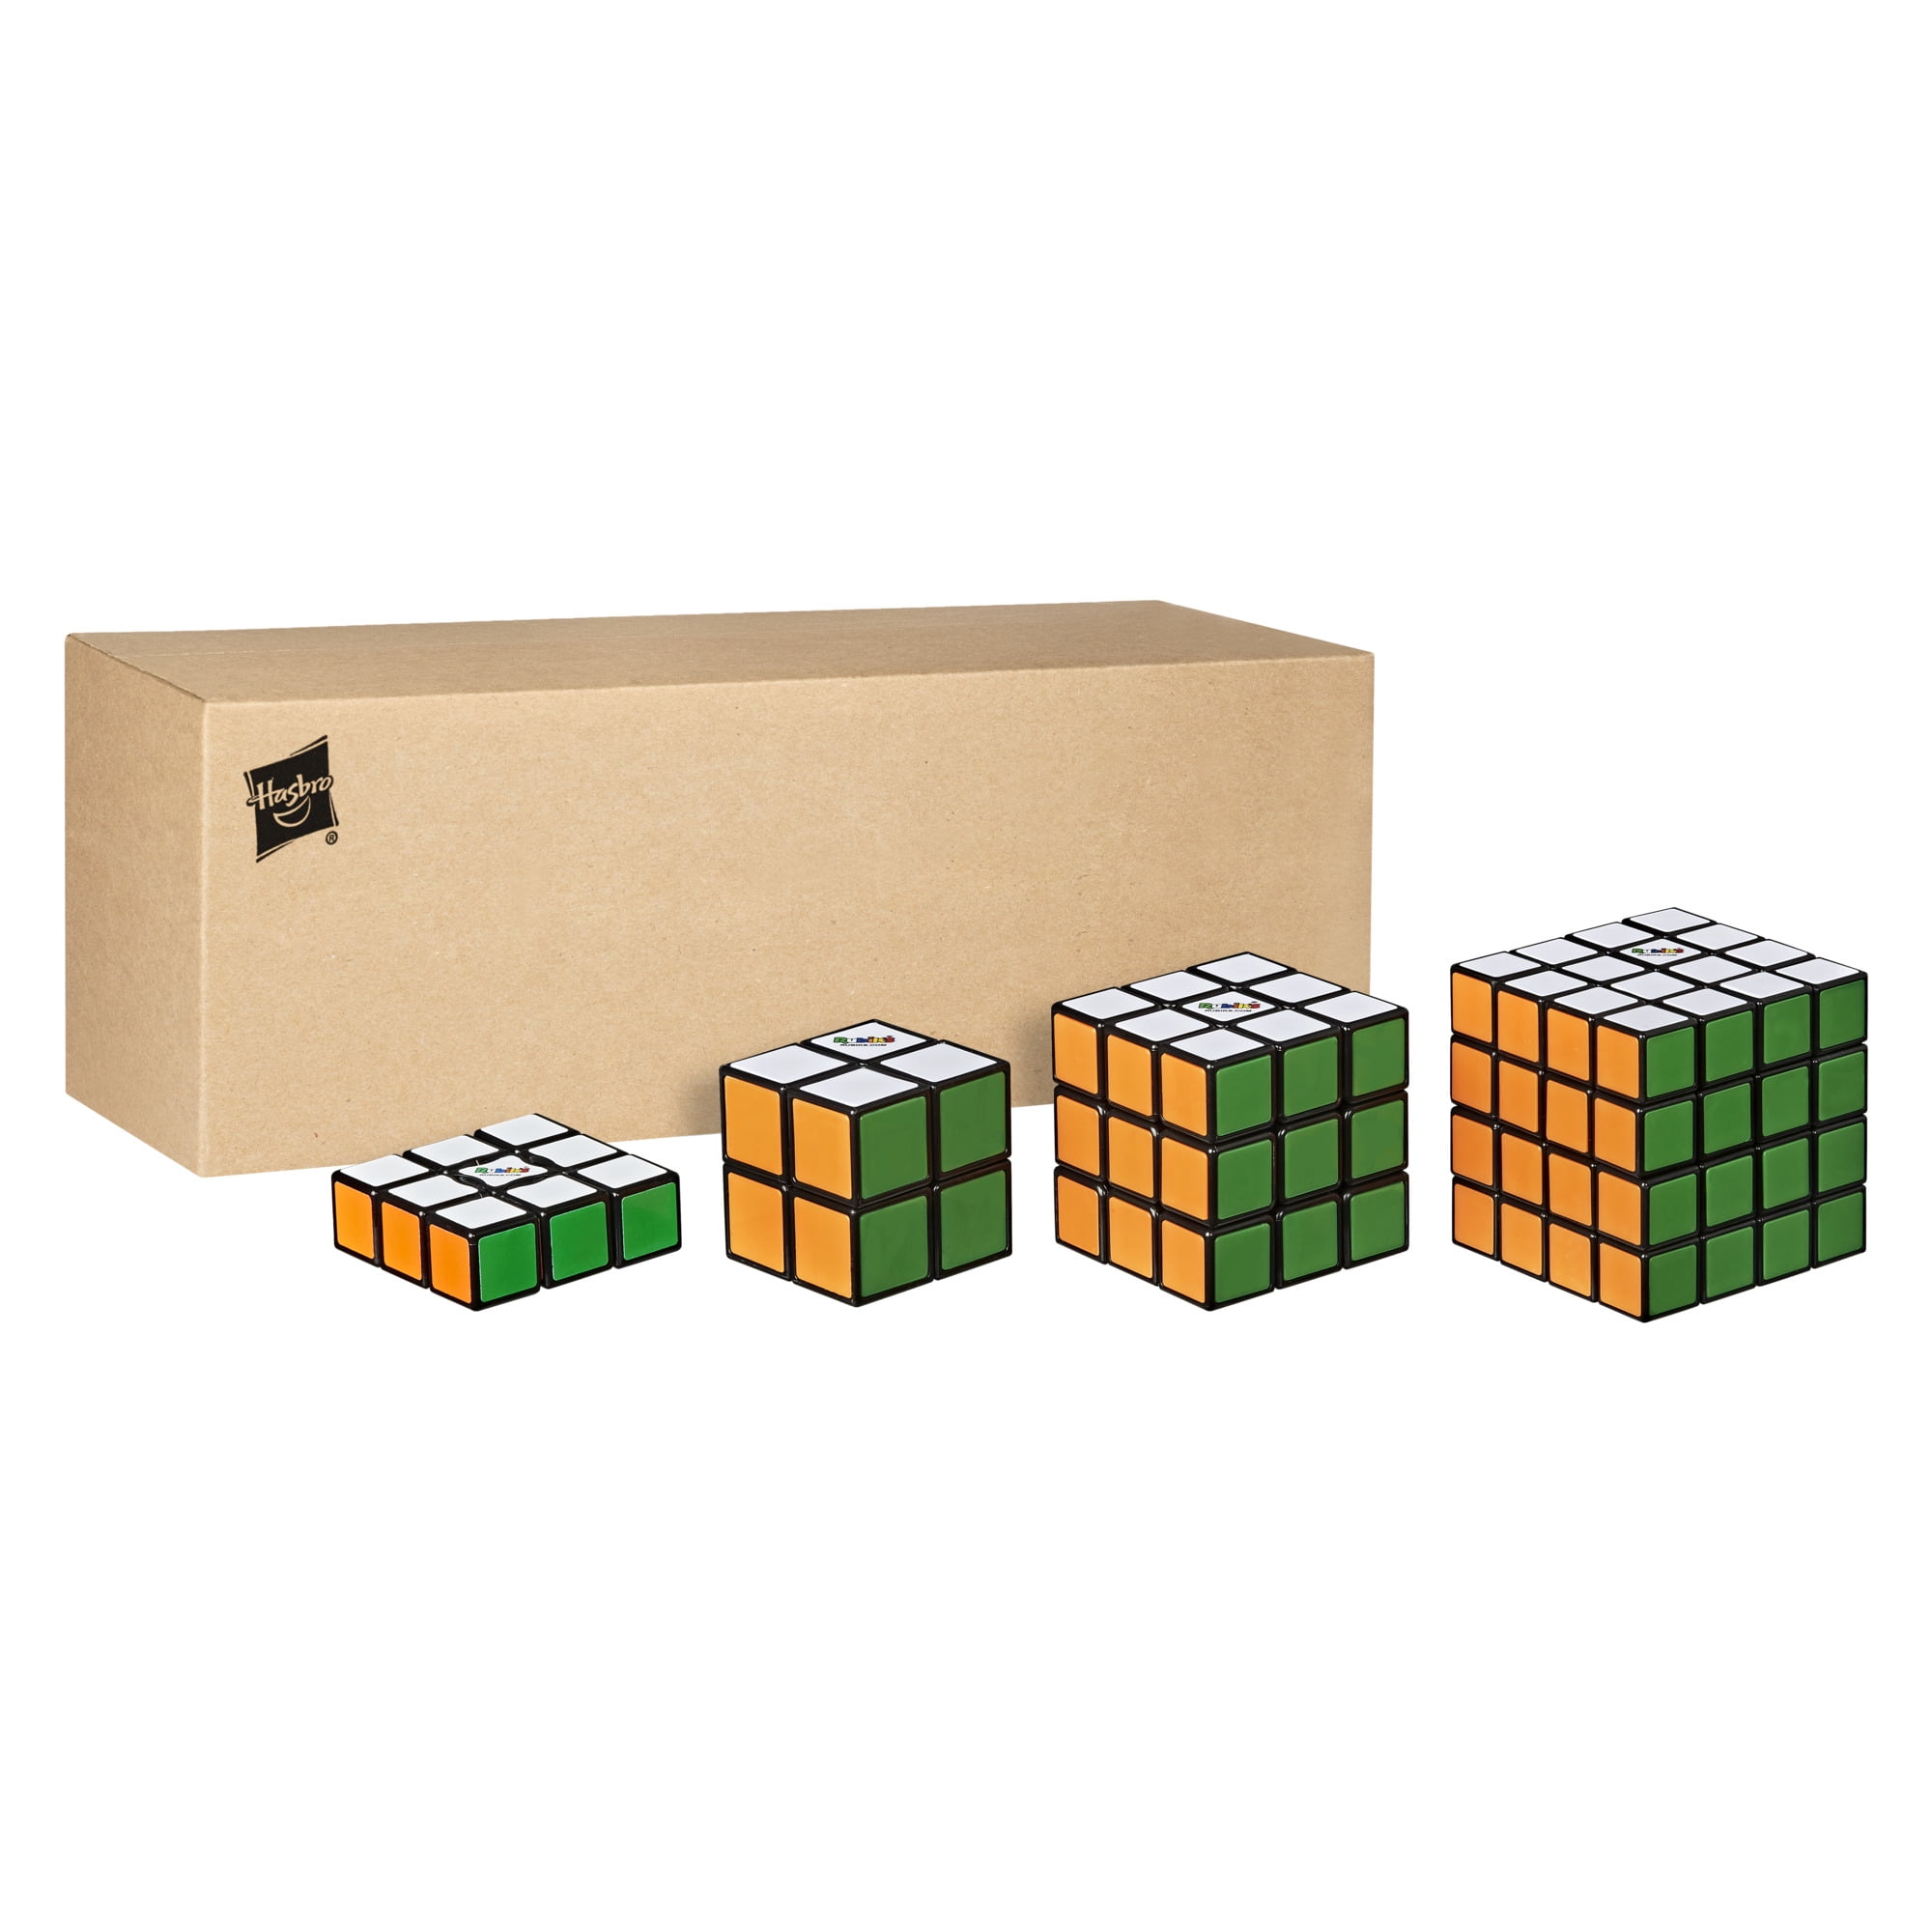 ORIGINAL Rubics Cube toy 3x3 rubics rubix puzzle brain kids fun magic 